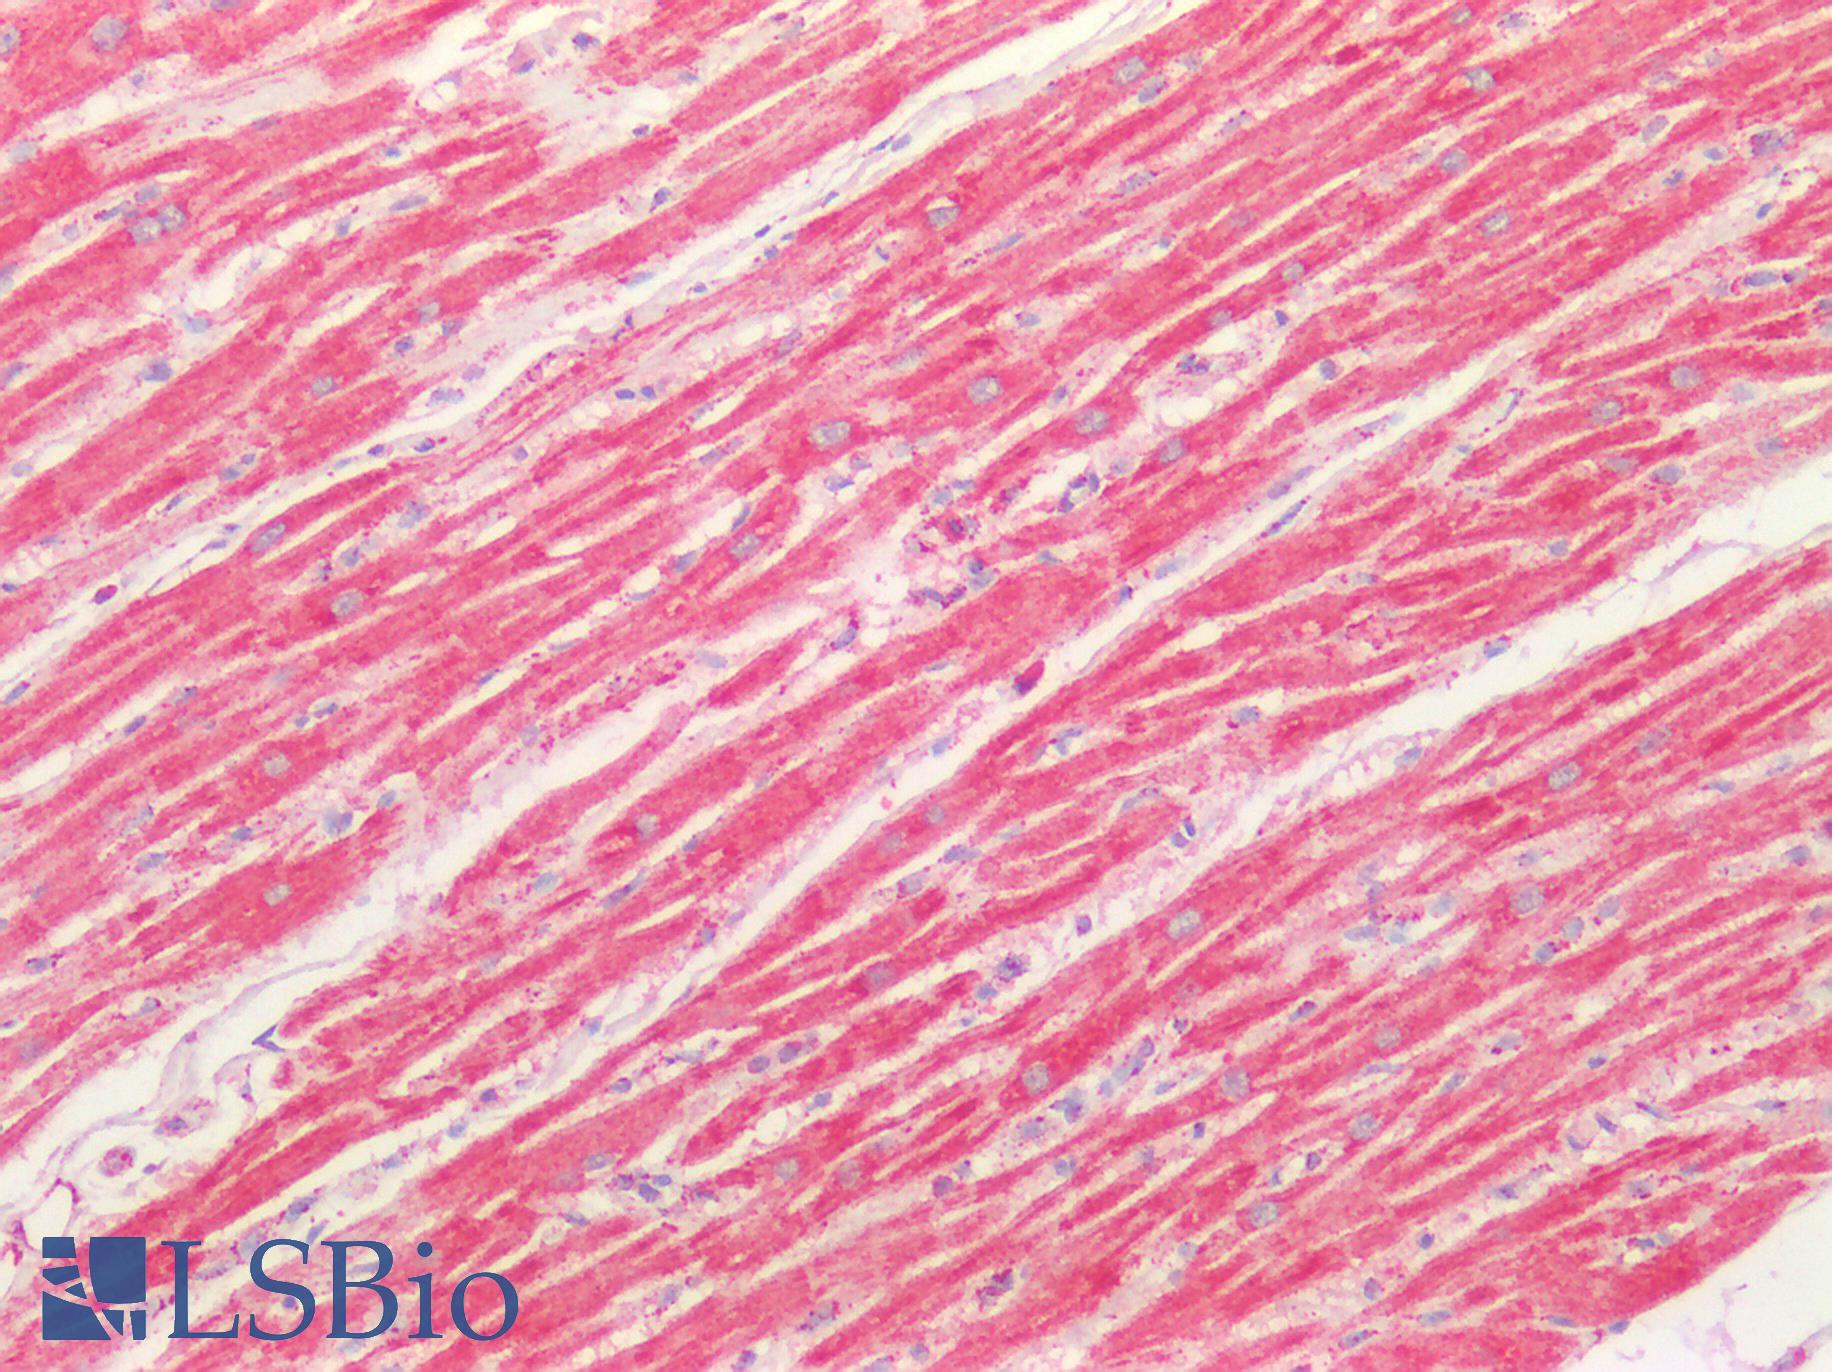 SOD2 / Mn SOD Antibody - Human Heart: Formalin-Fixed, Paraffin-Embedded (FFPE)